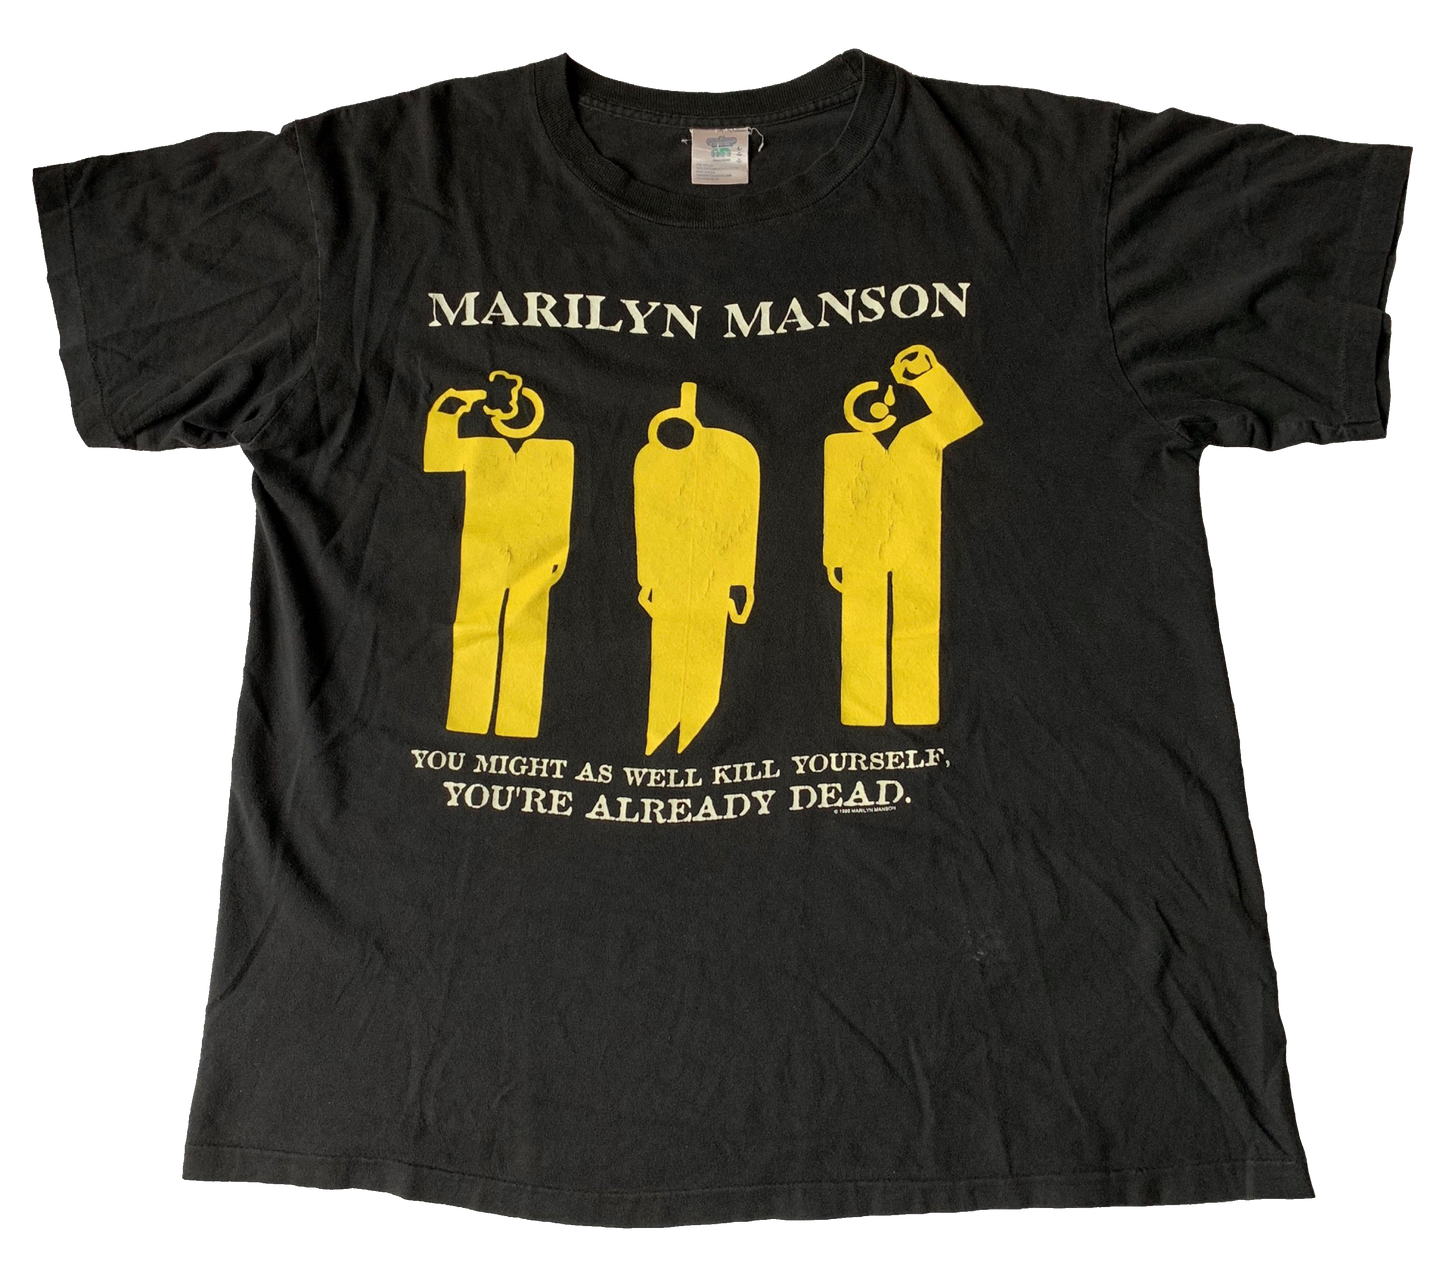 MARILYN MANSON「ALREADY DEAD」L